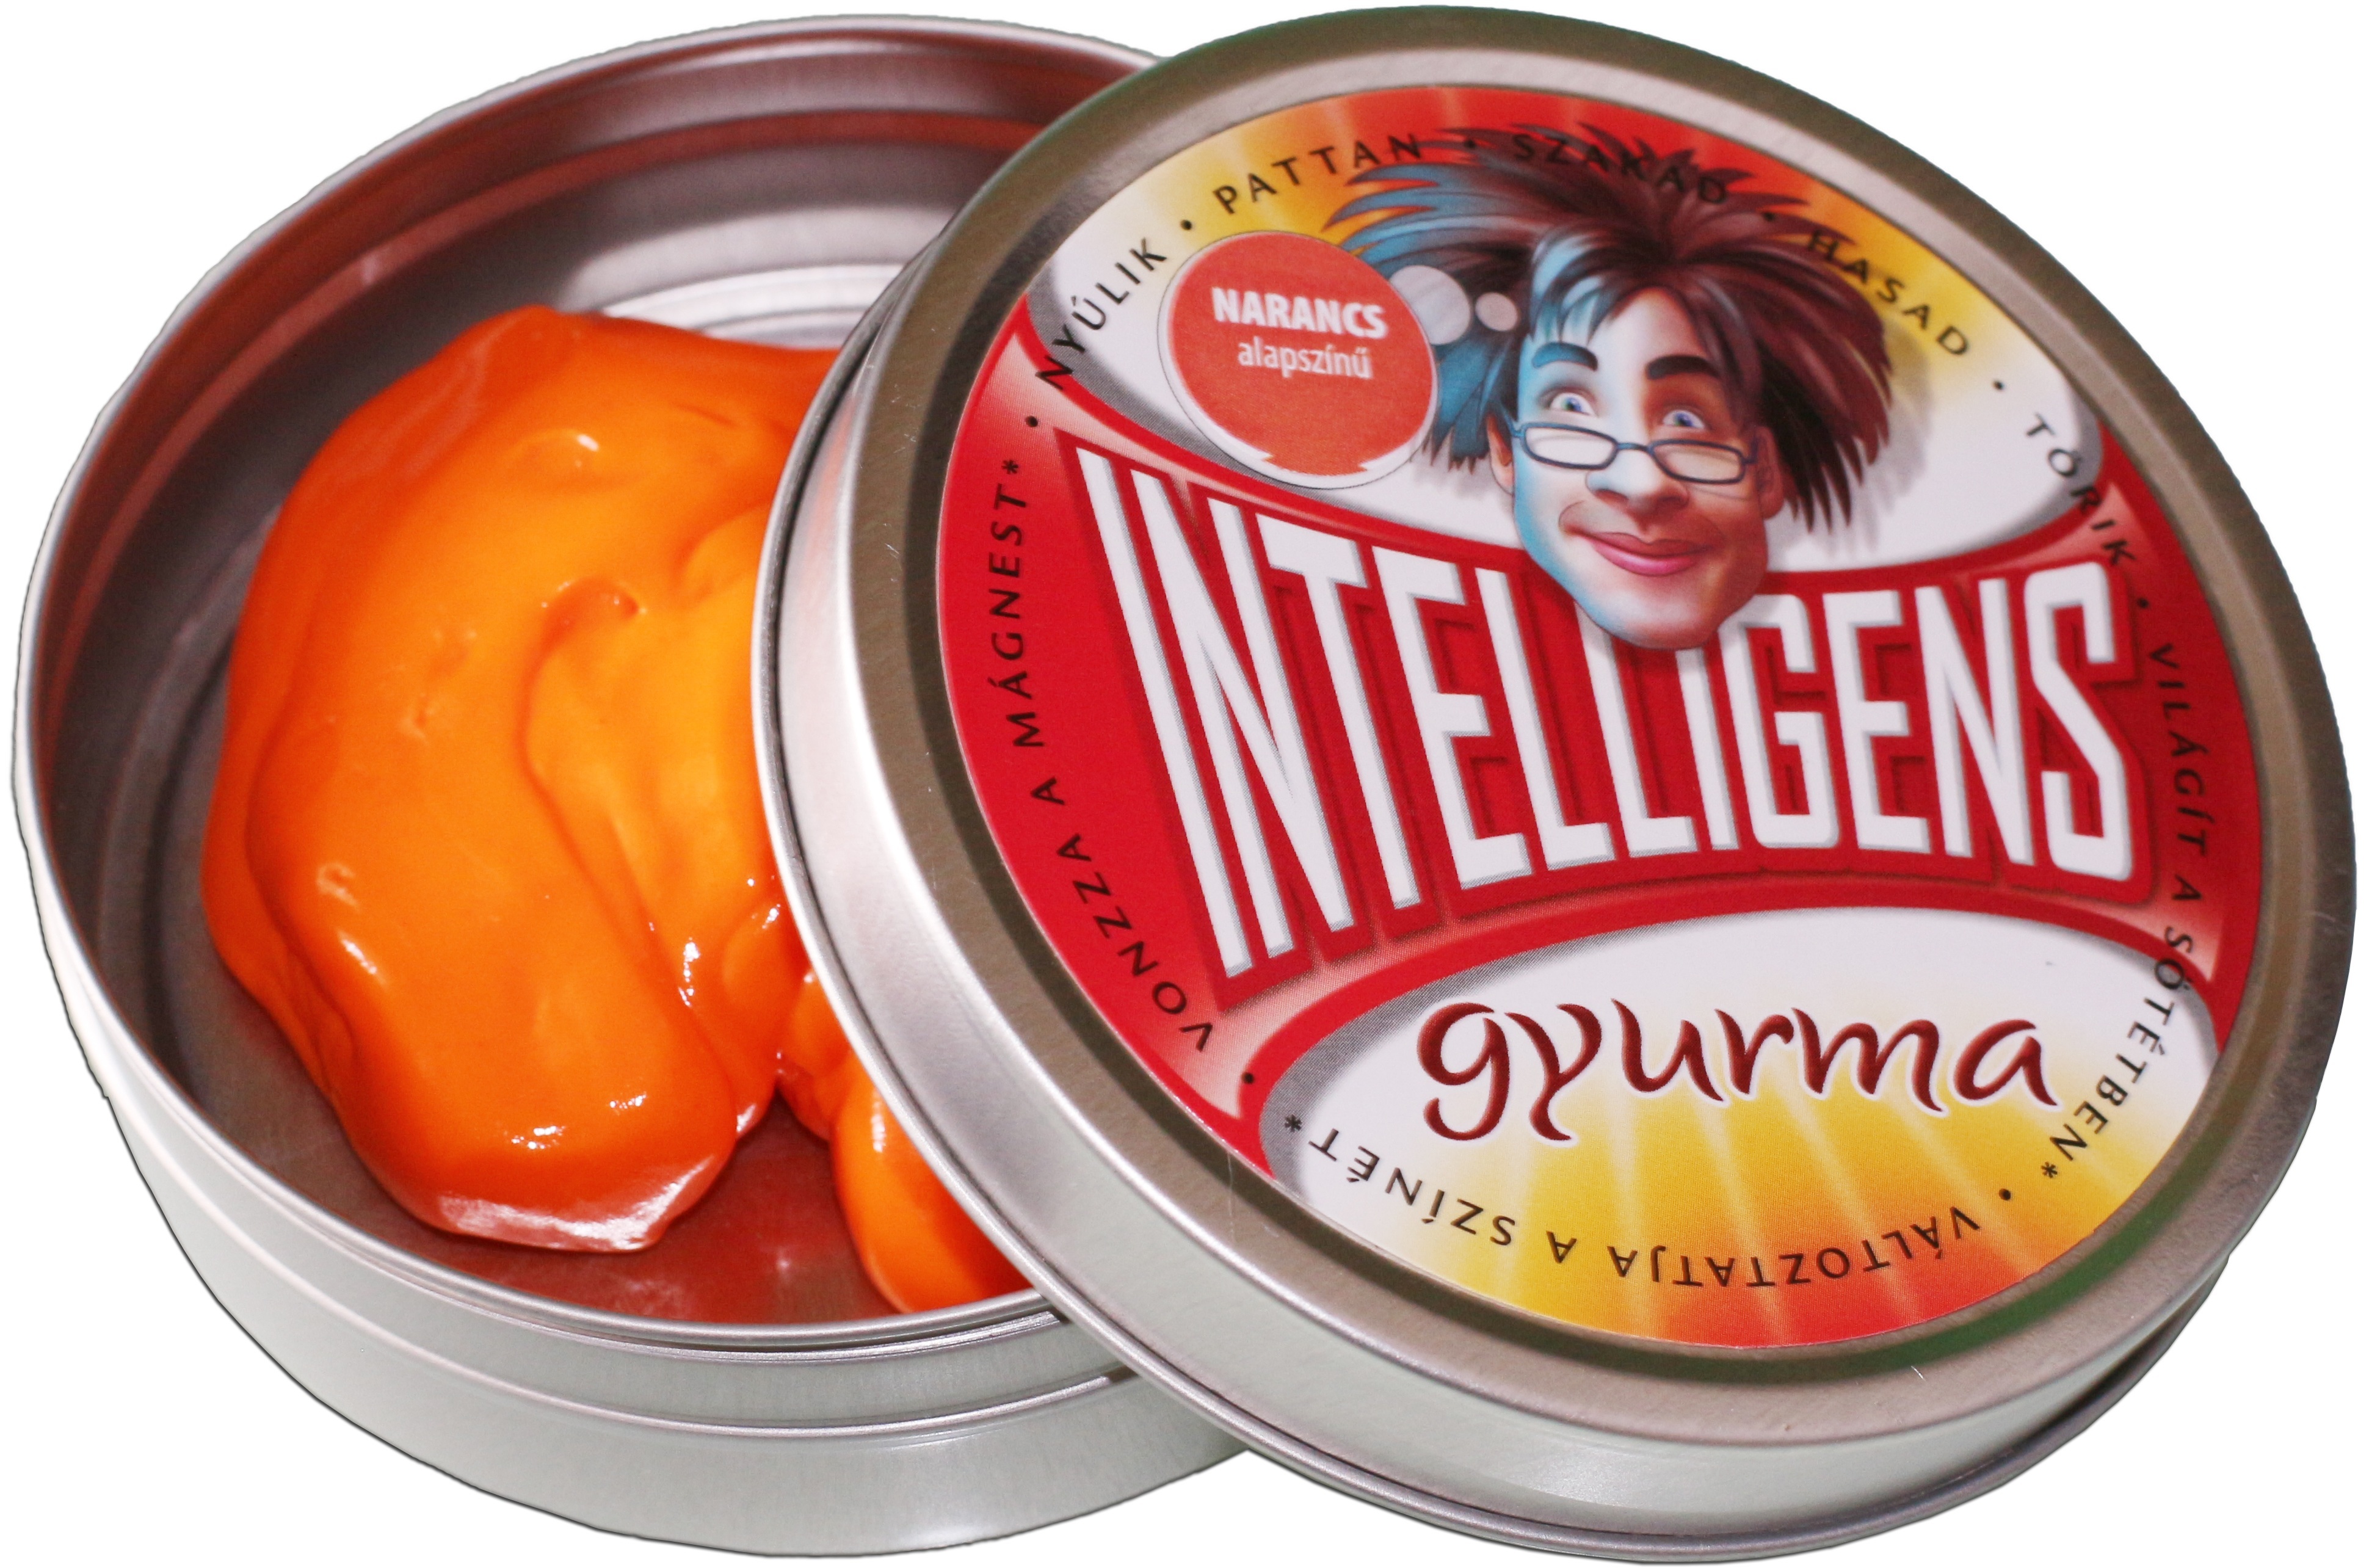 Intelligens Gyurma, narancs